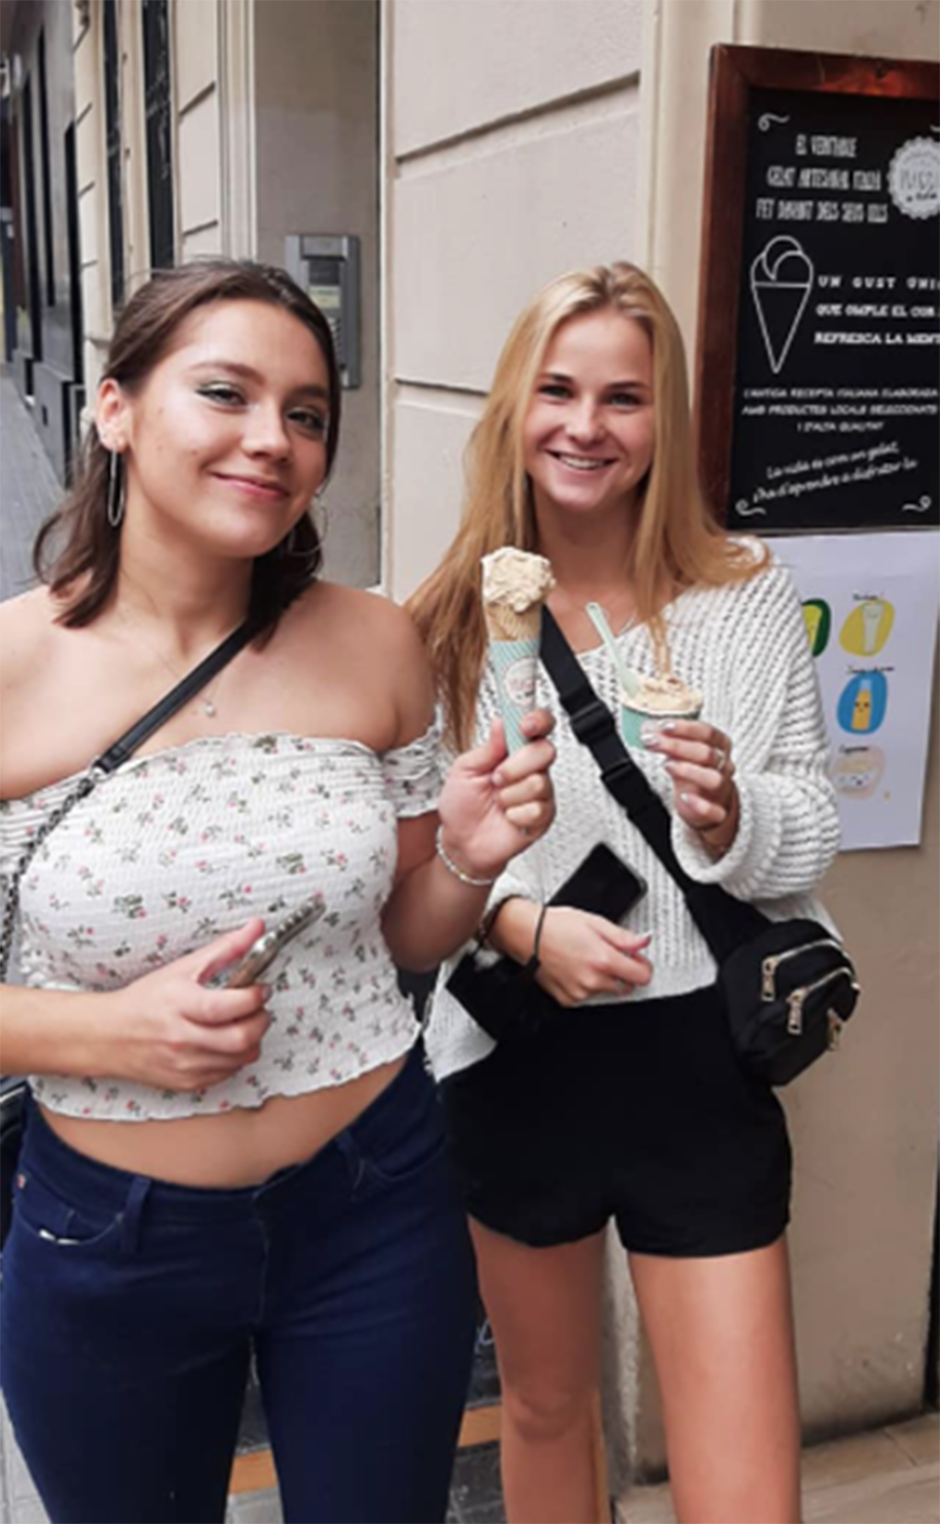 2 students eating ice cream